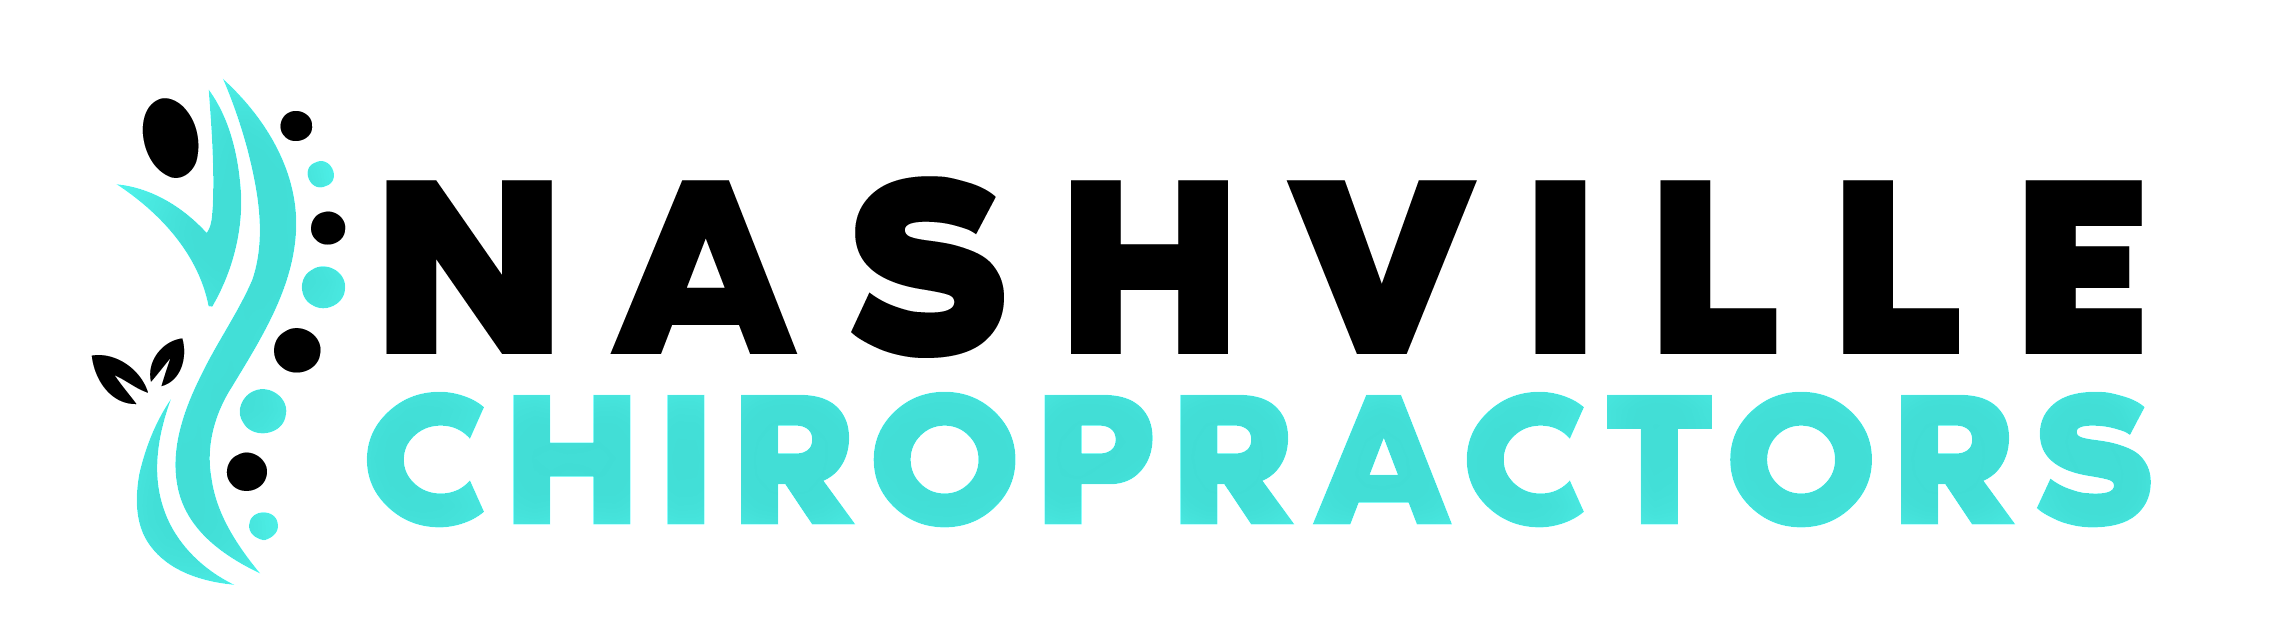 Nashville Chiropractors's Logo